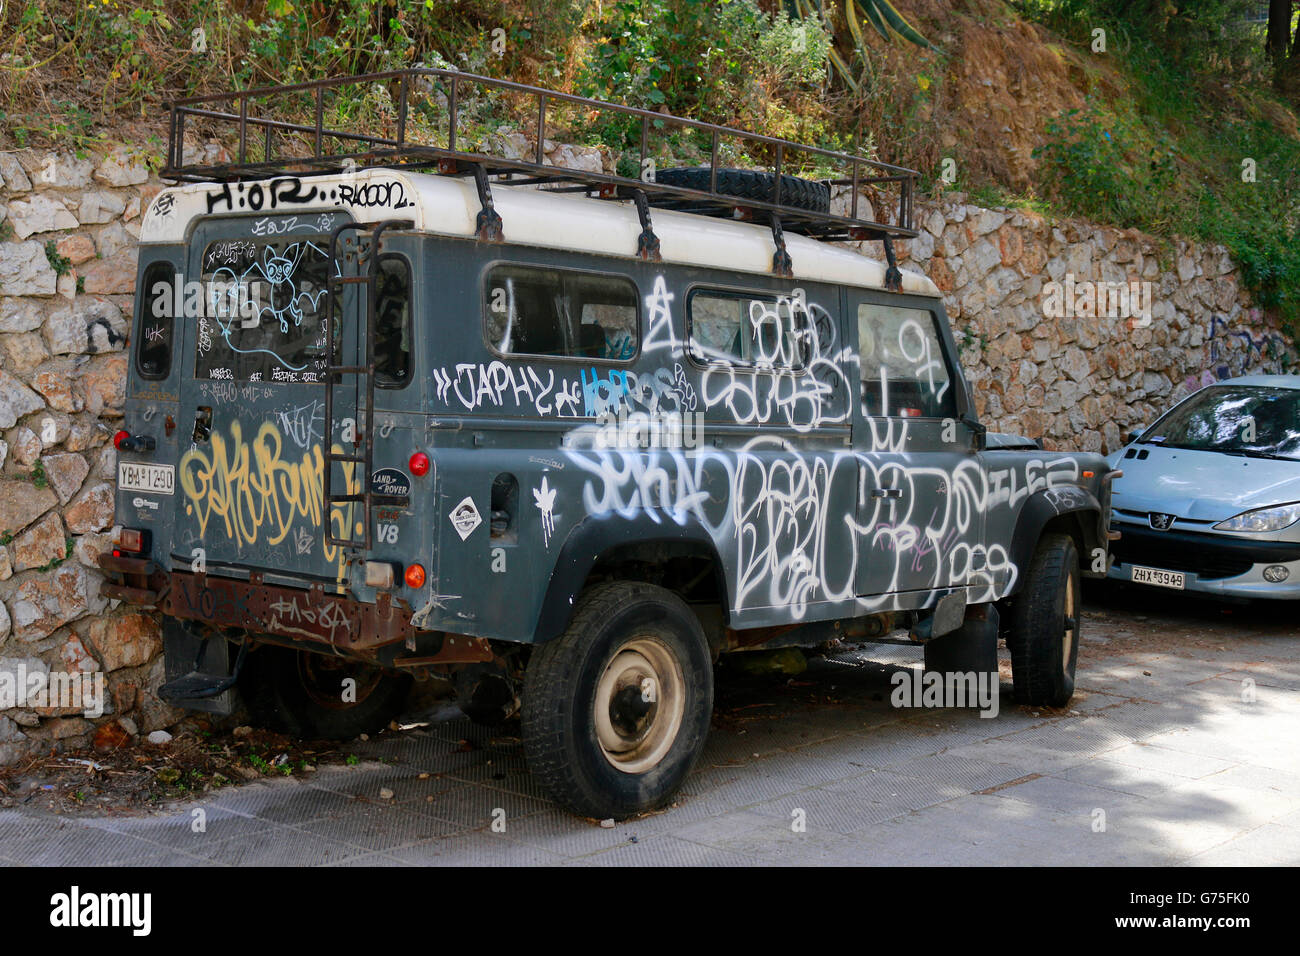 Vandalismus vandalism hi-res stock photography and images - Alamy